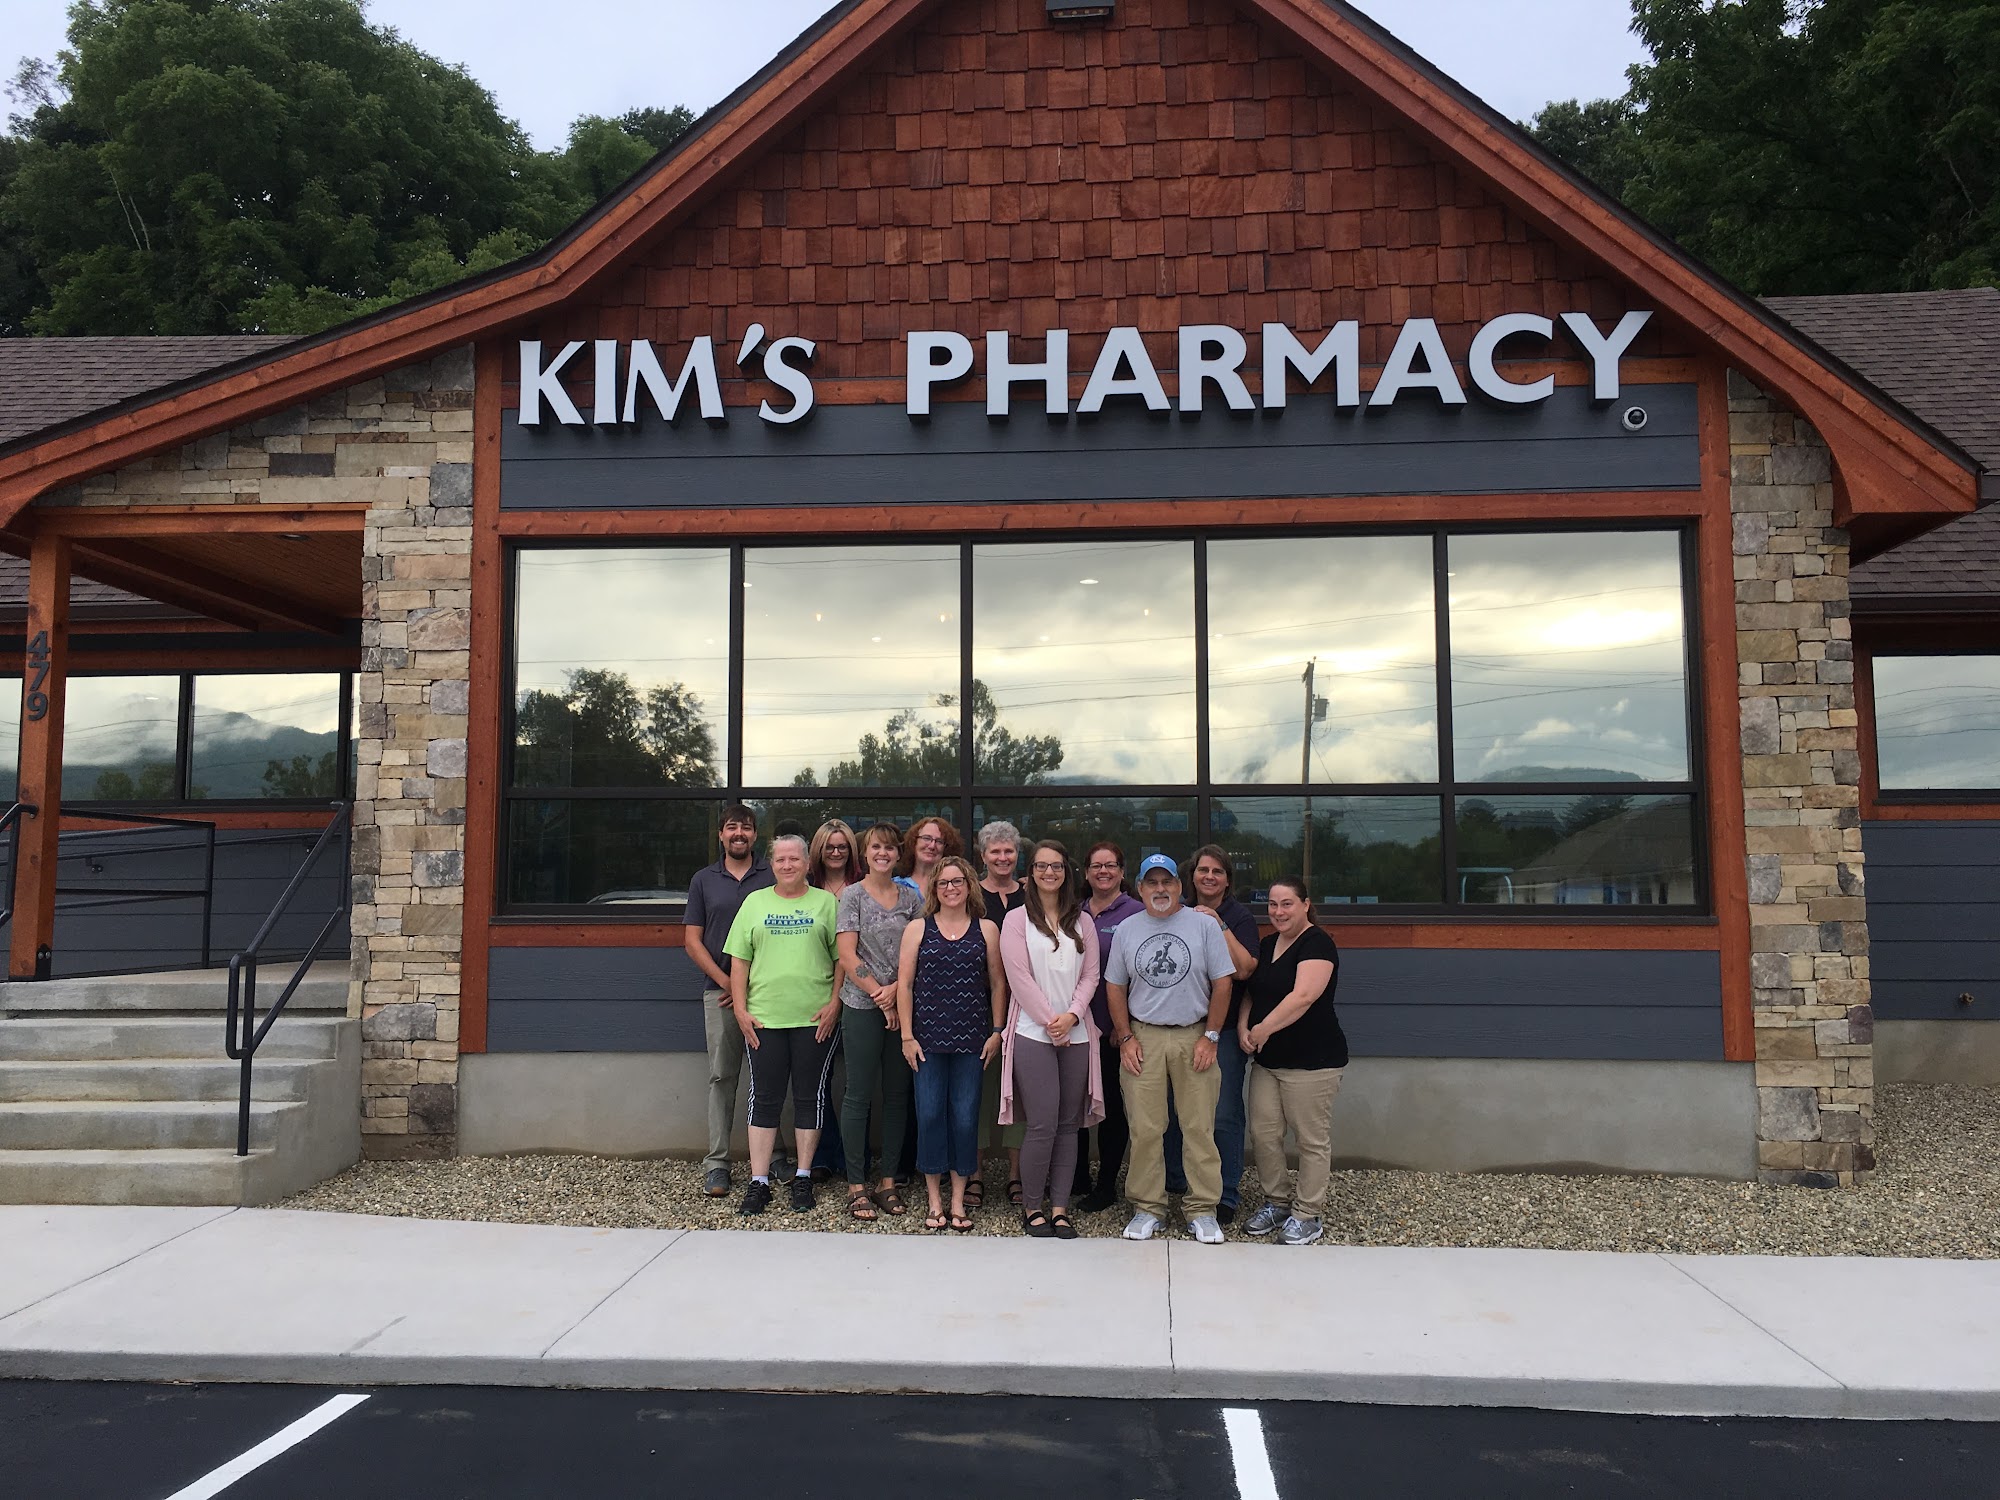 Kim's Pharmacy